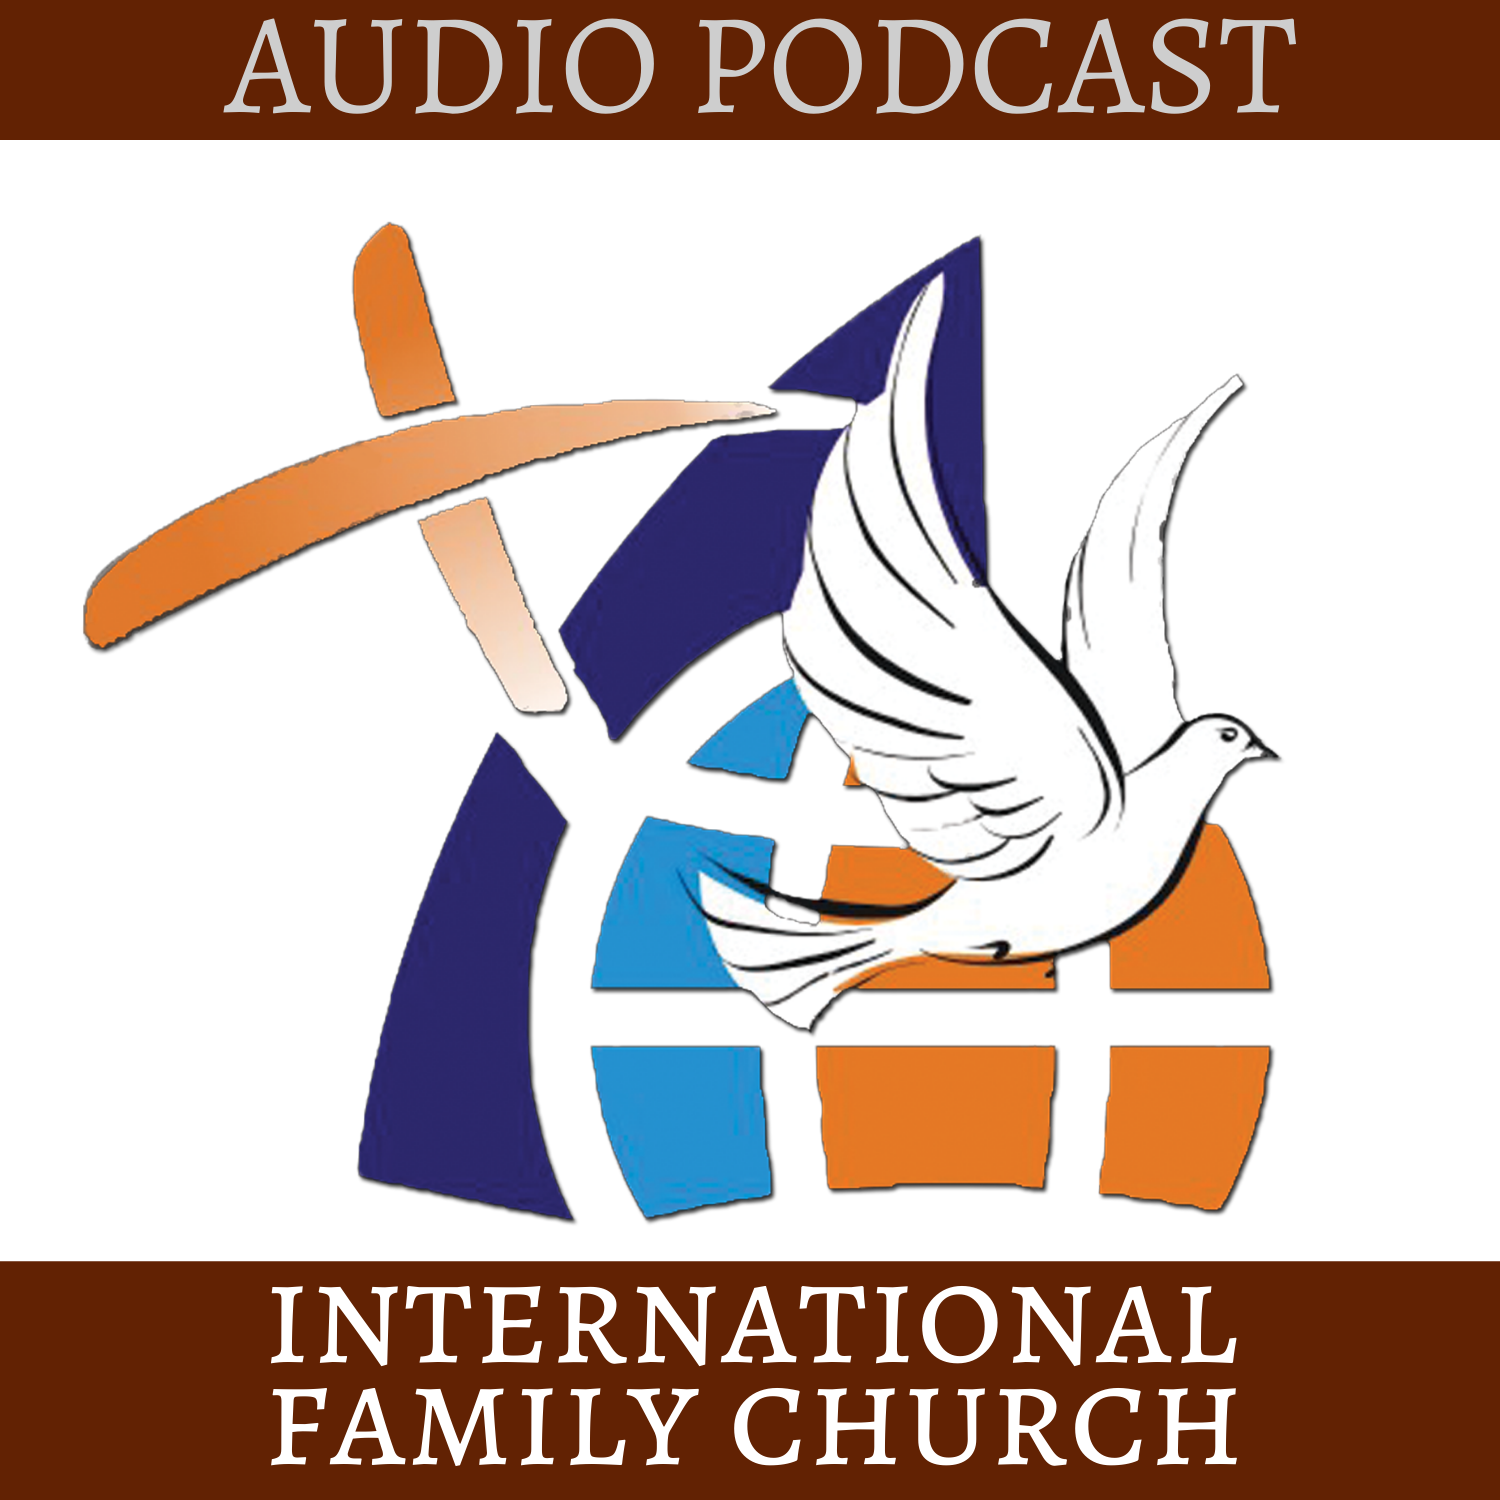 International Family Church Podcast